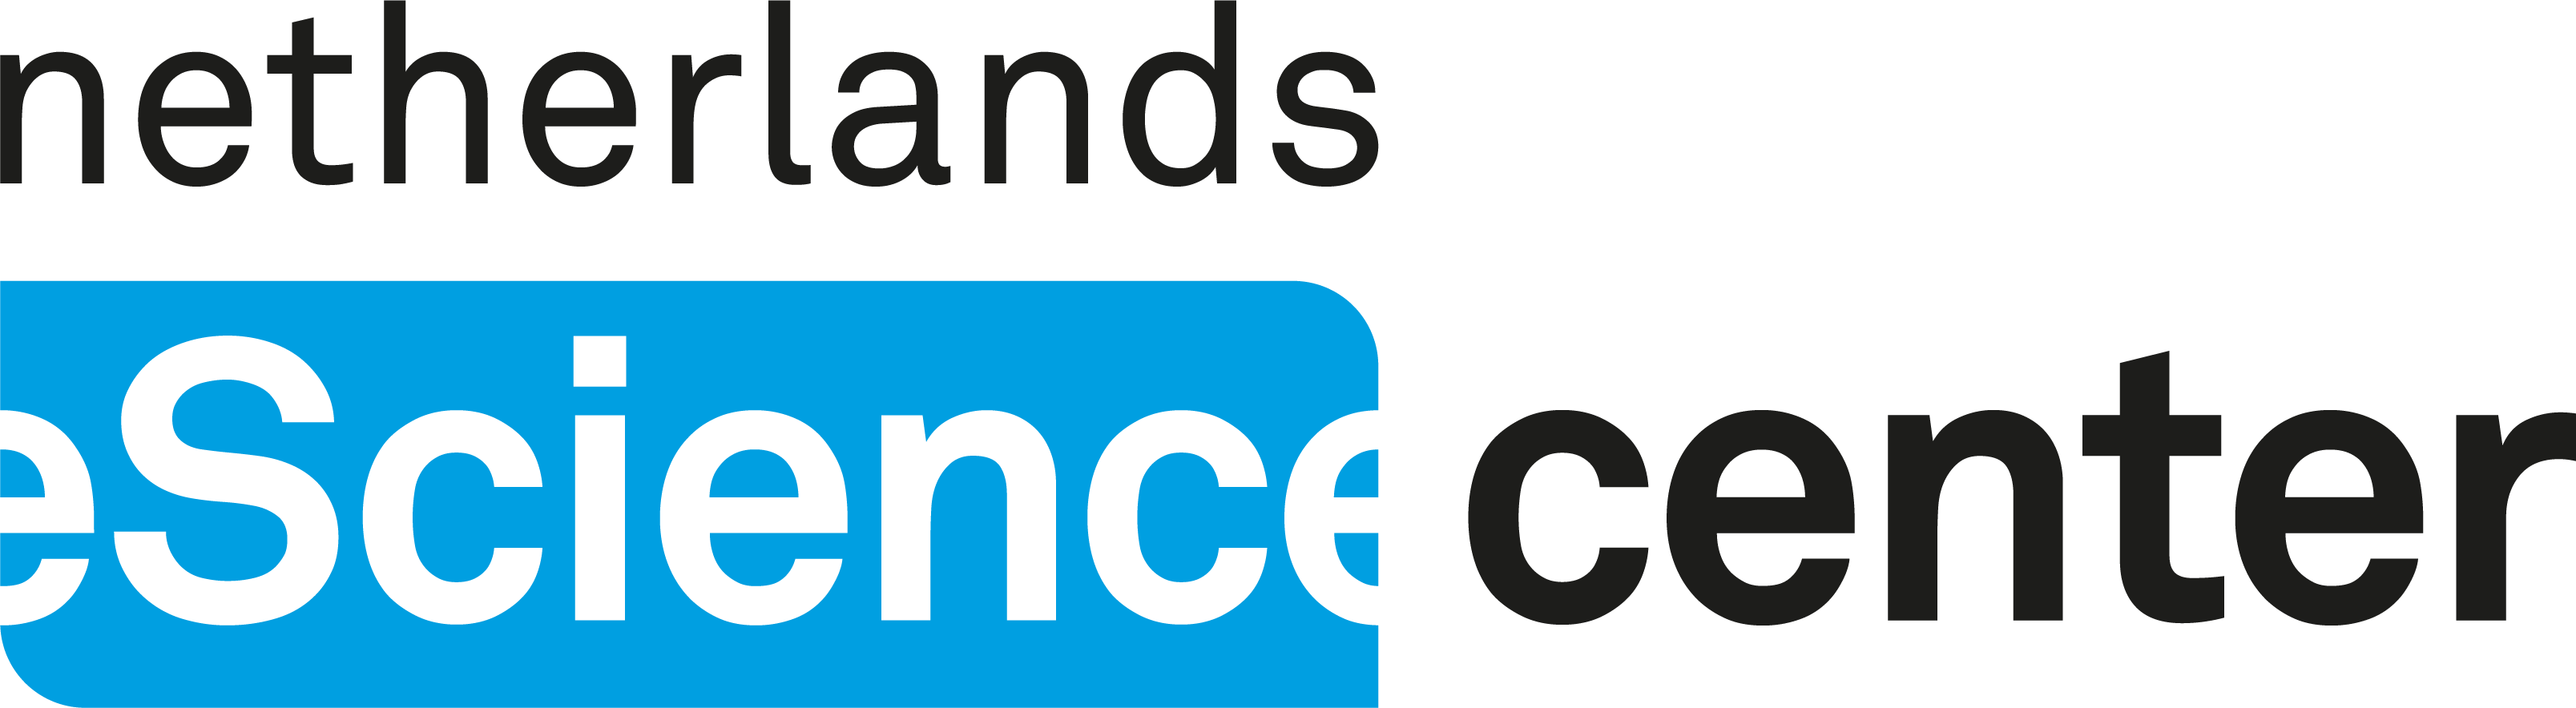 Netherlands eScience Center logo